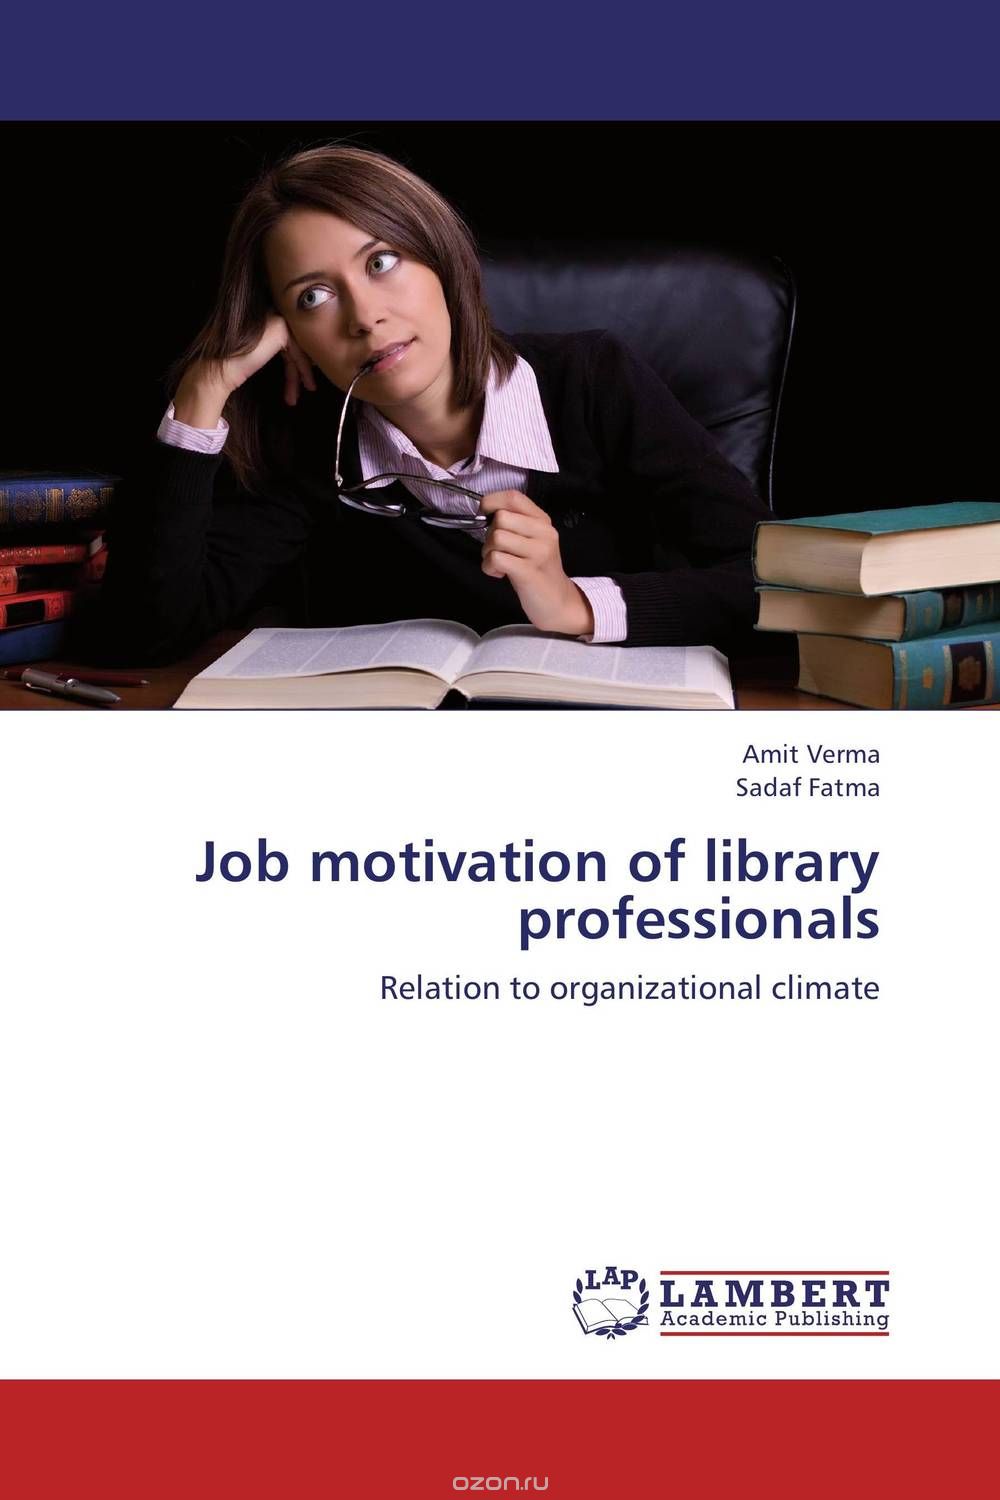 Скачать книгу "Job motivation of library professionals"